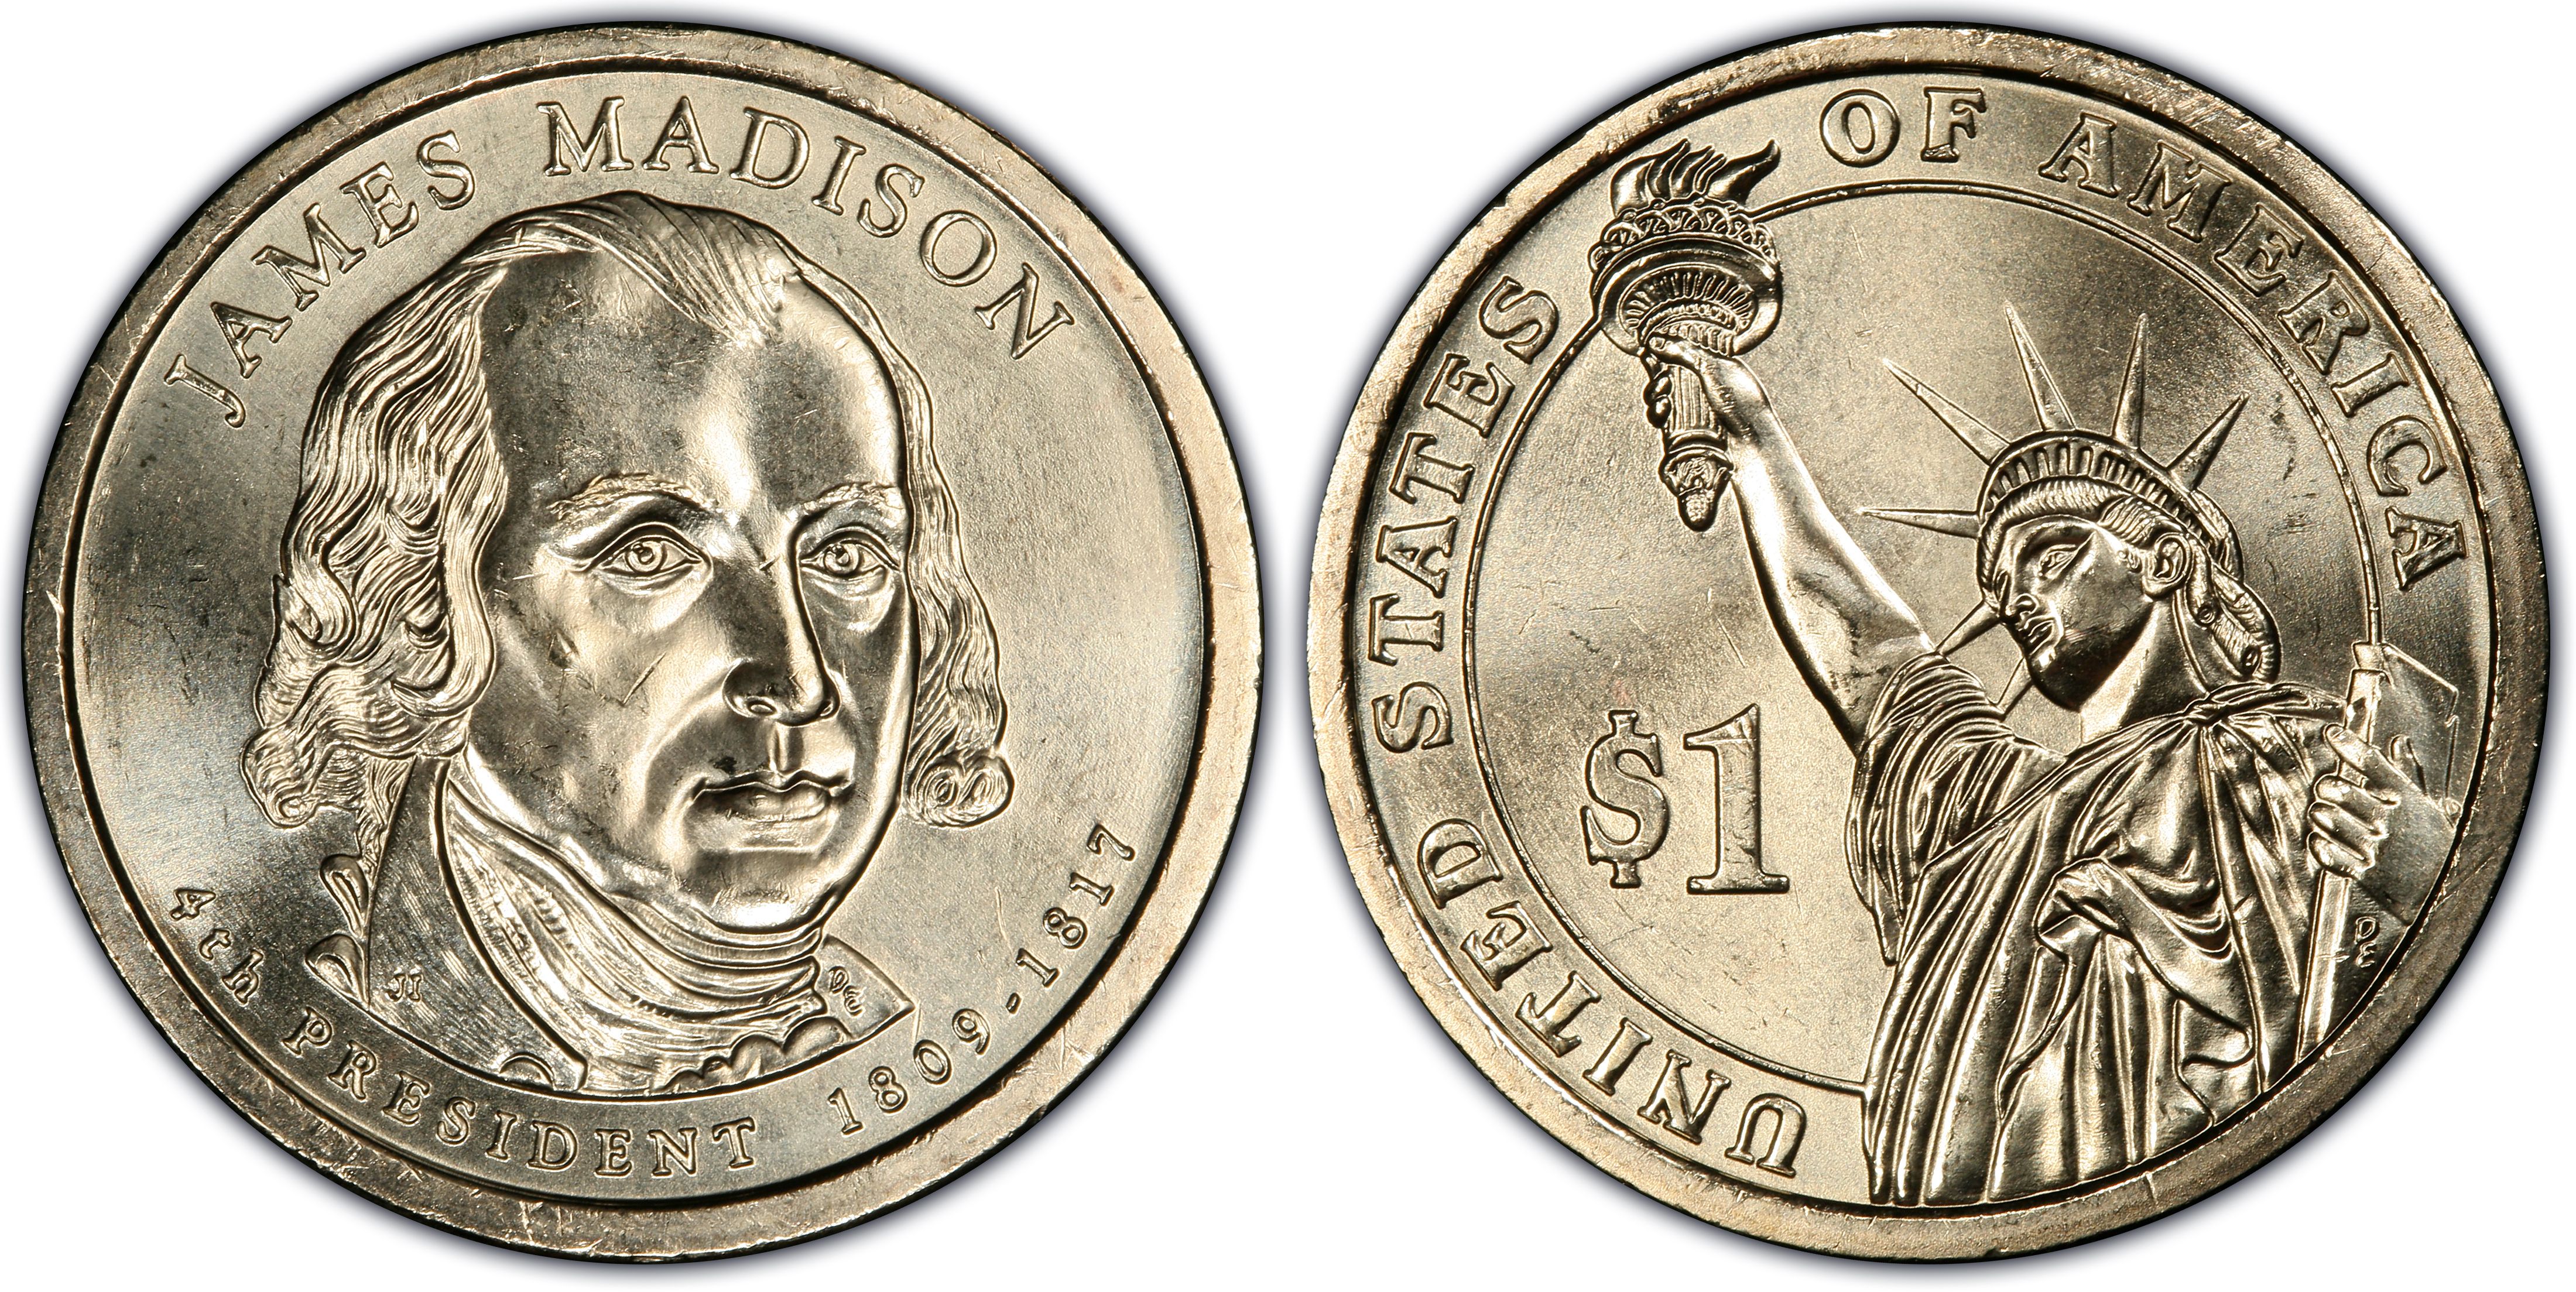 1809 gold dollar coin worth james madison